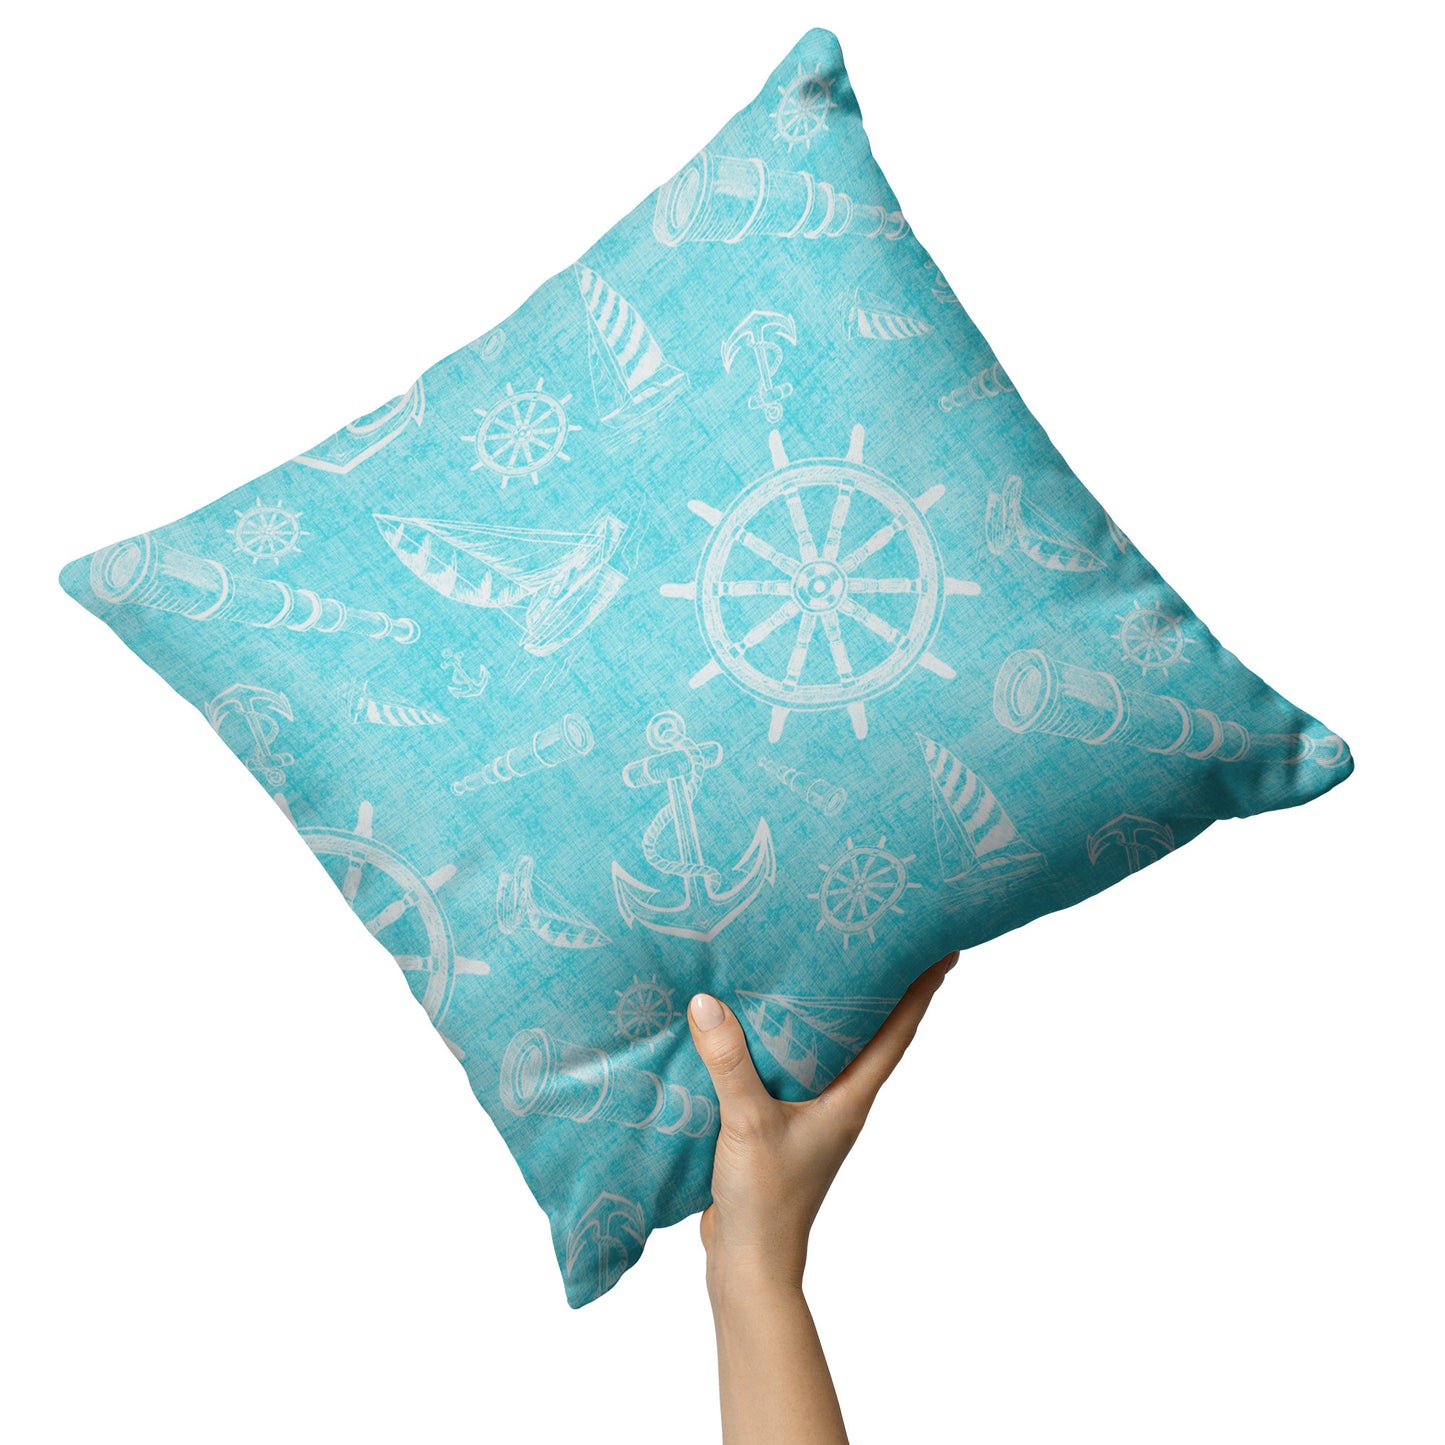 Nautical Sketches Design on Tropical Linen Textured Background, Throw Pillow